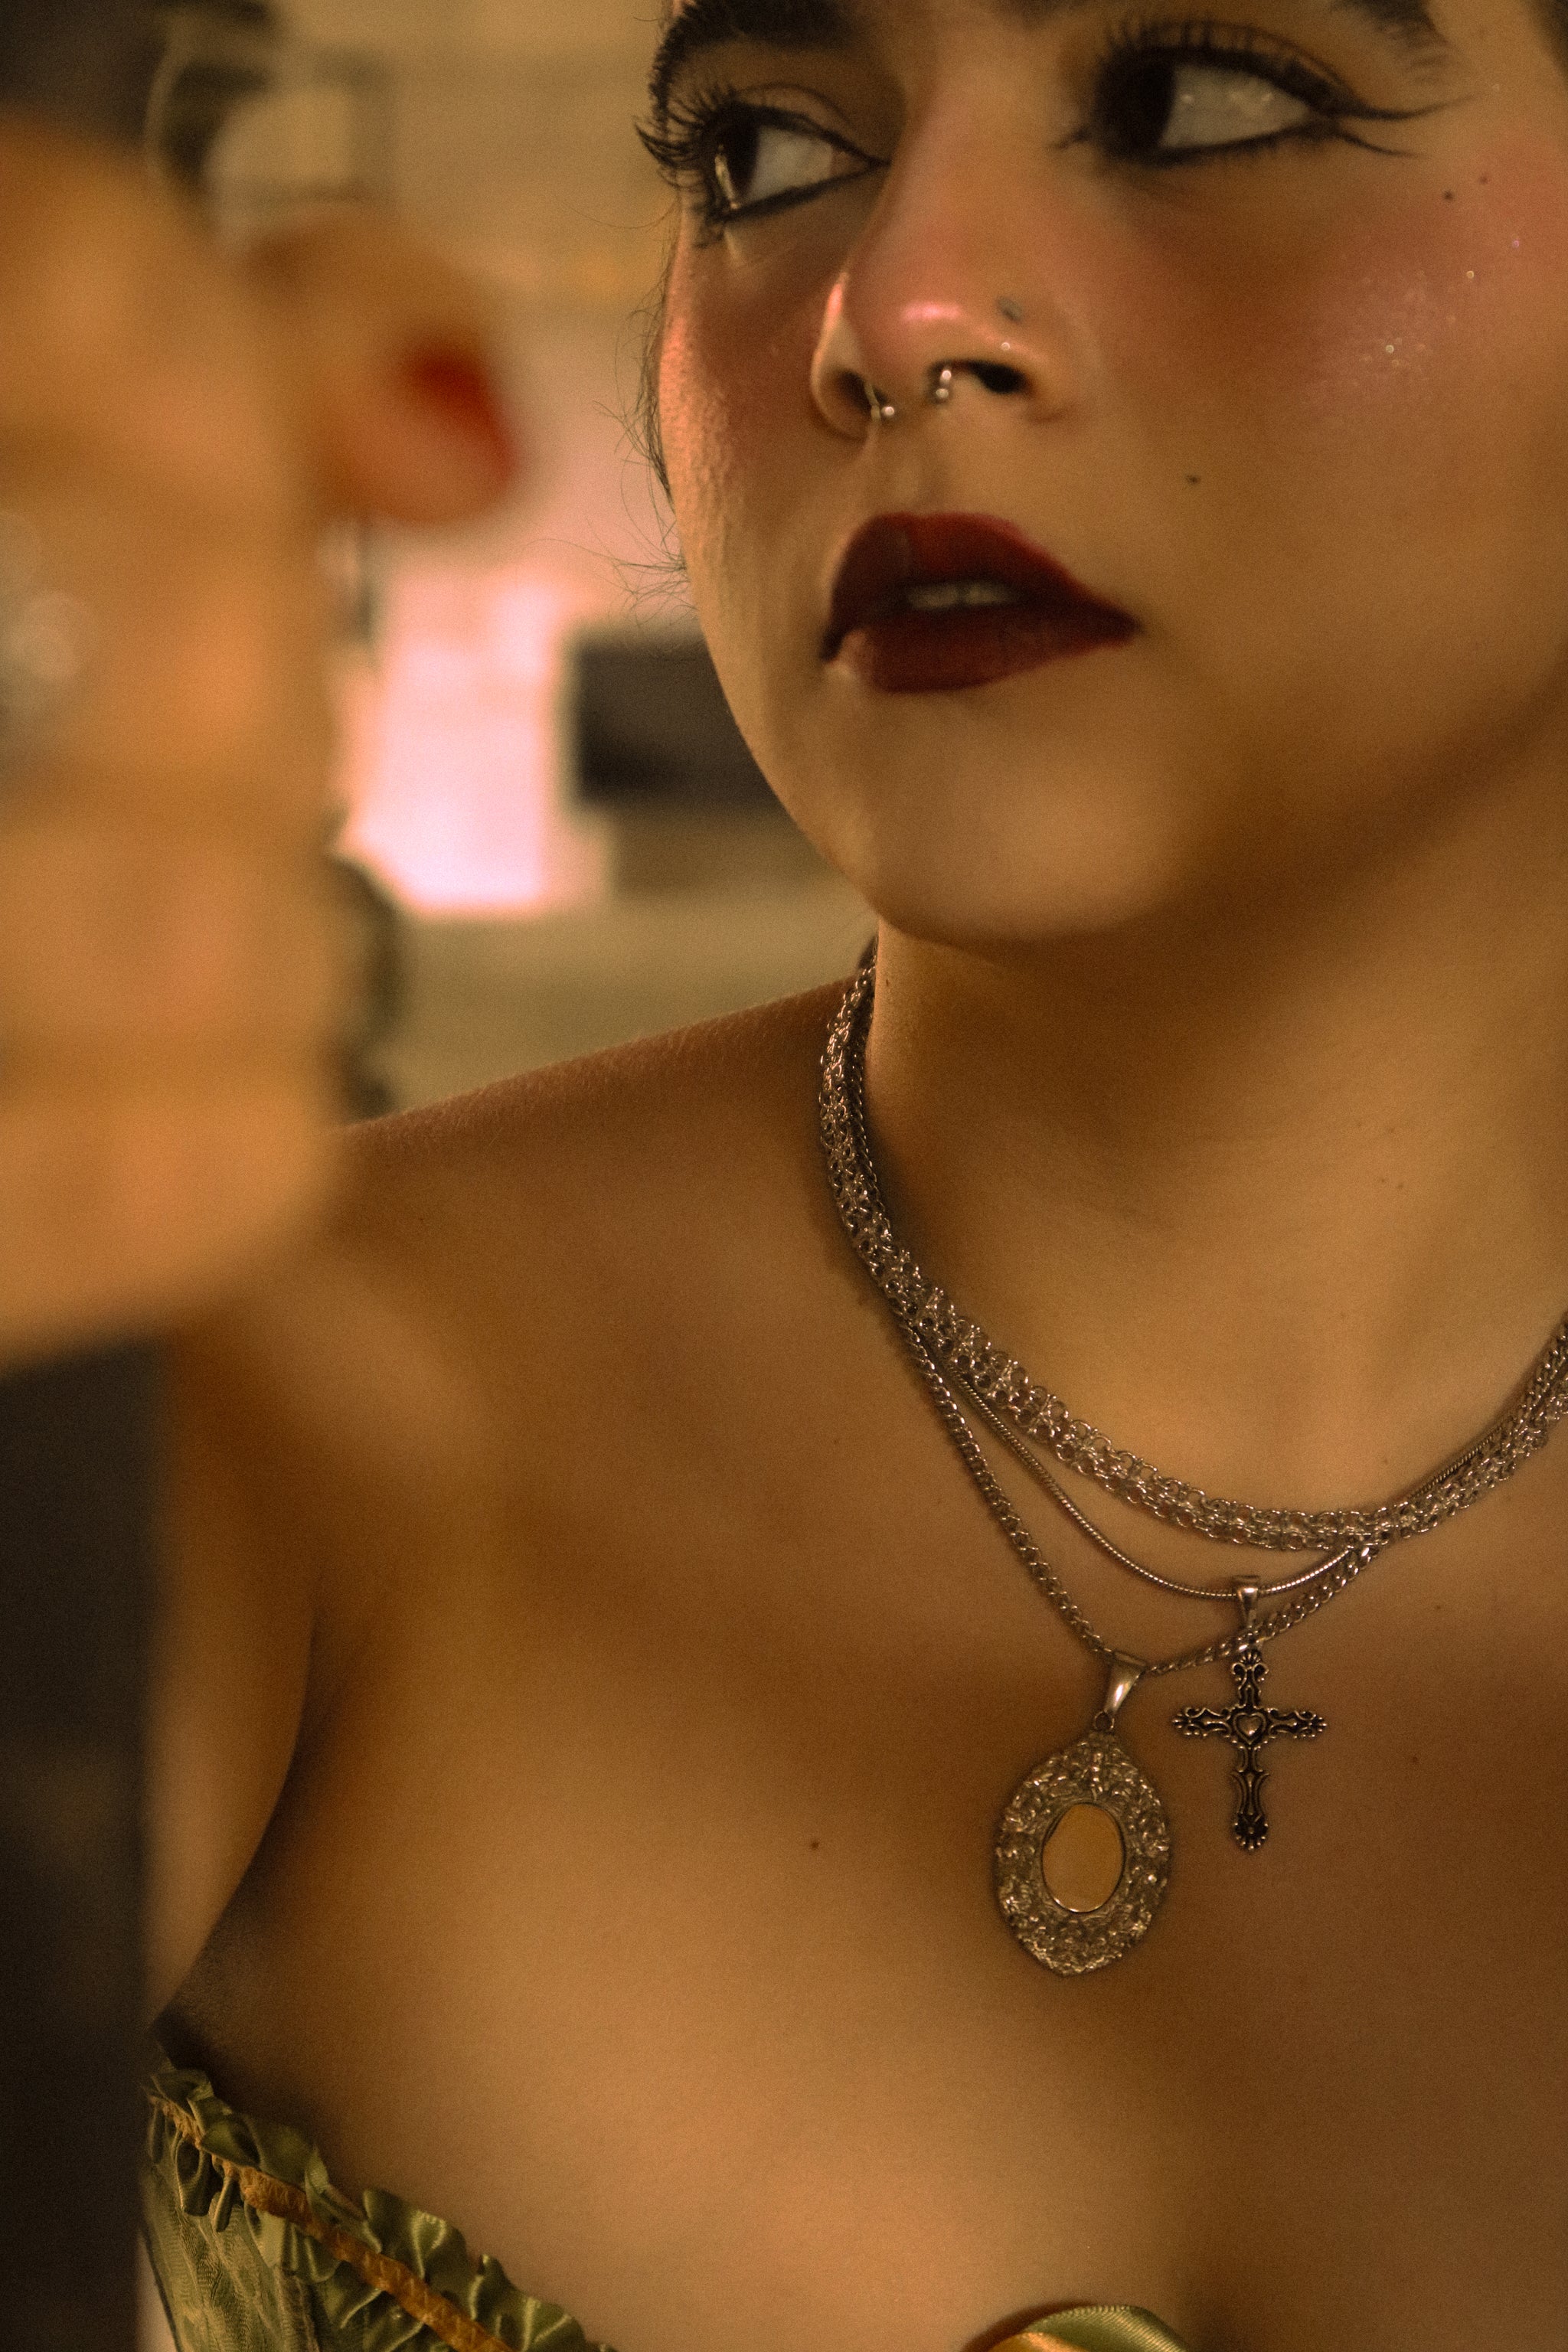 Amor Eterno Necklace - Fashion Jewelry by Yordy.